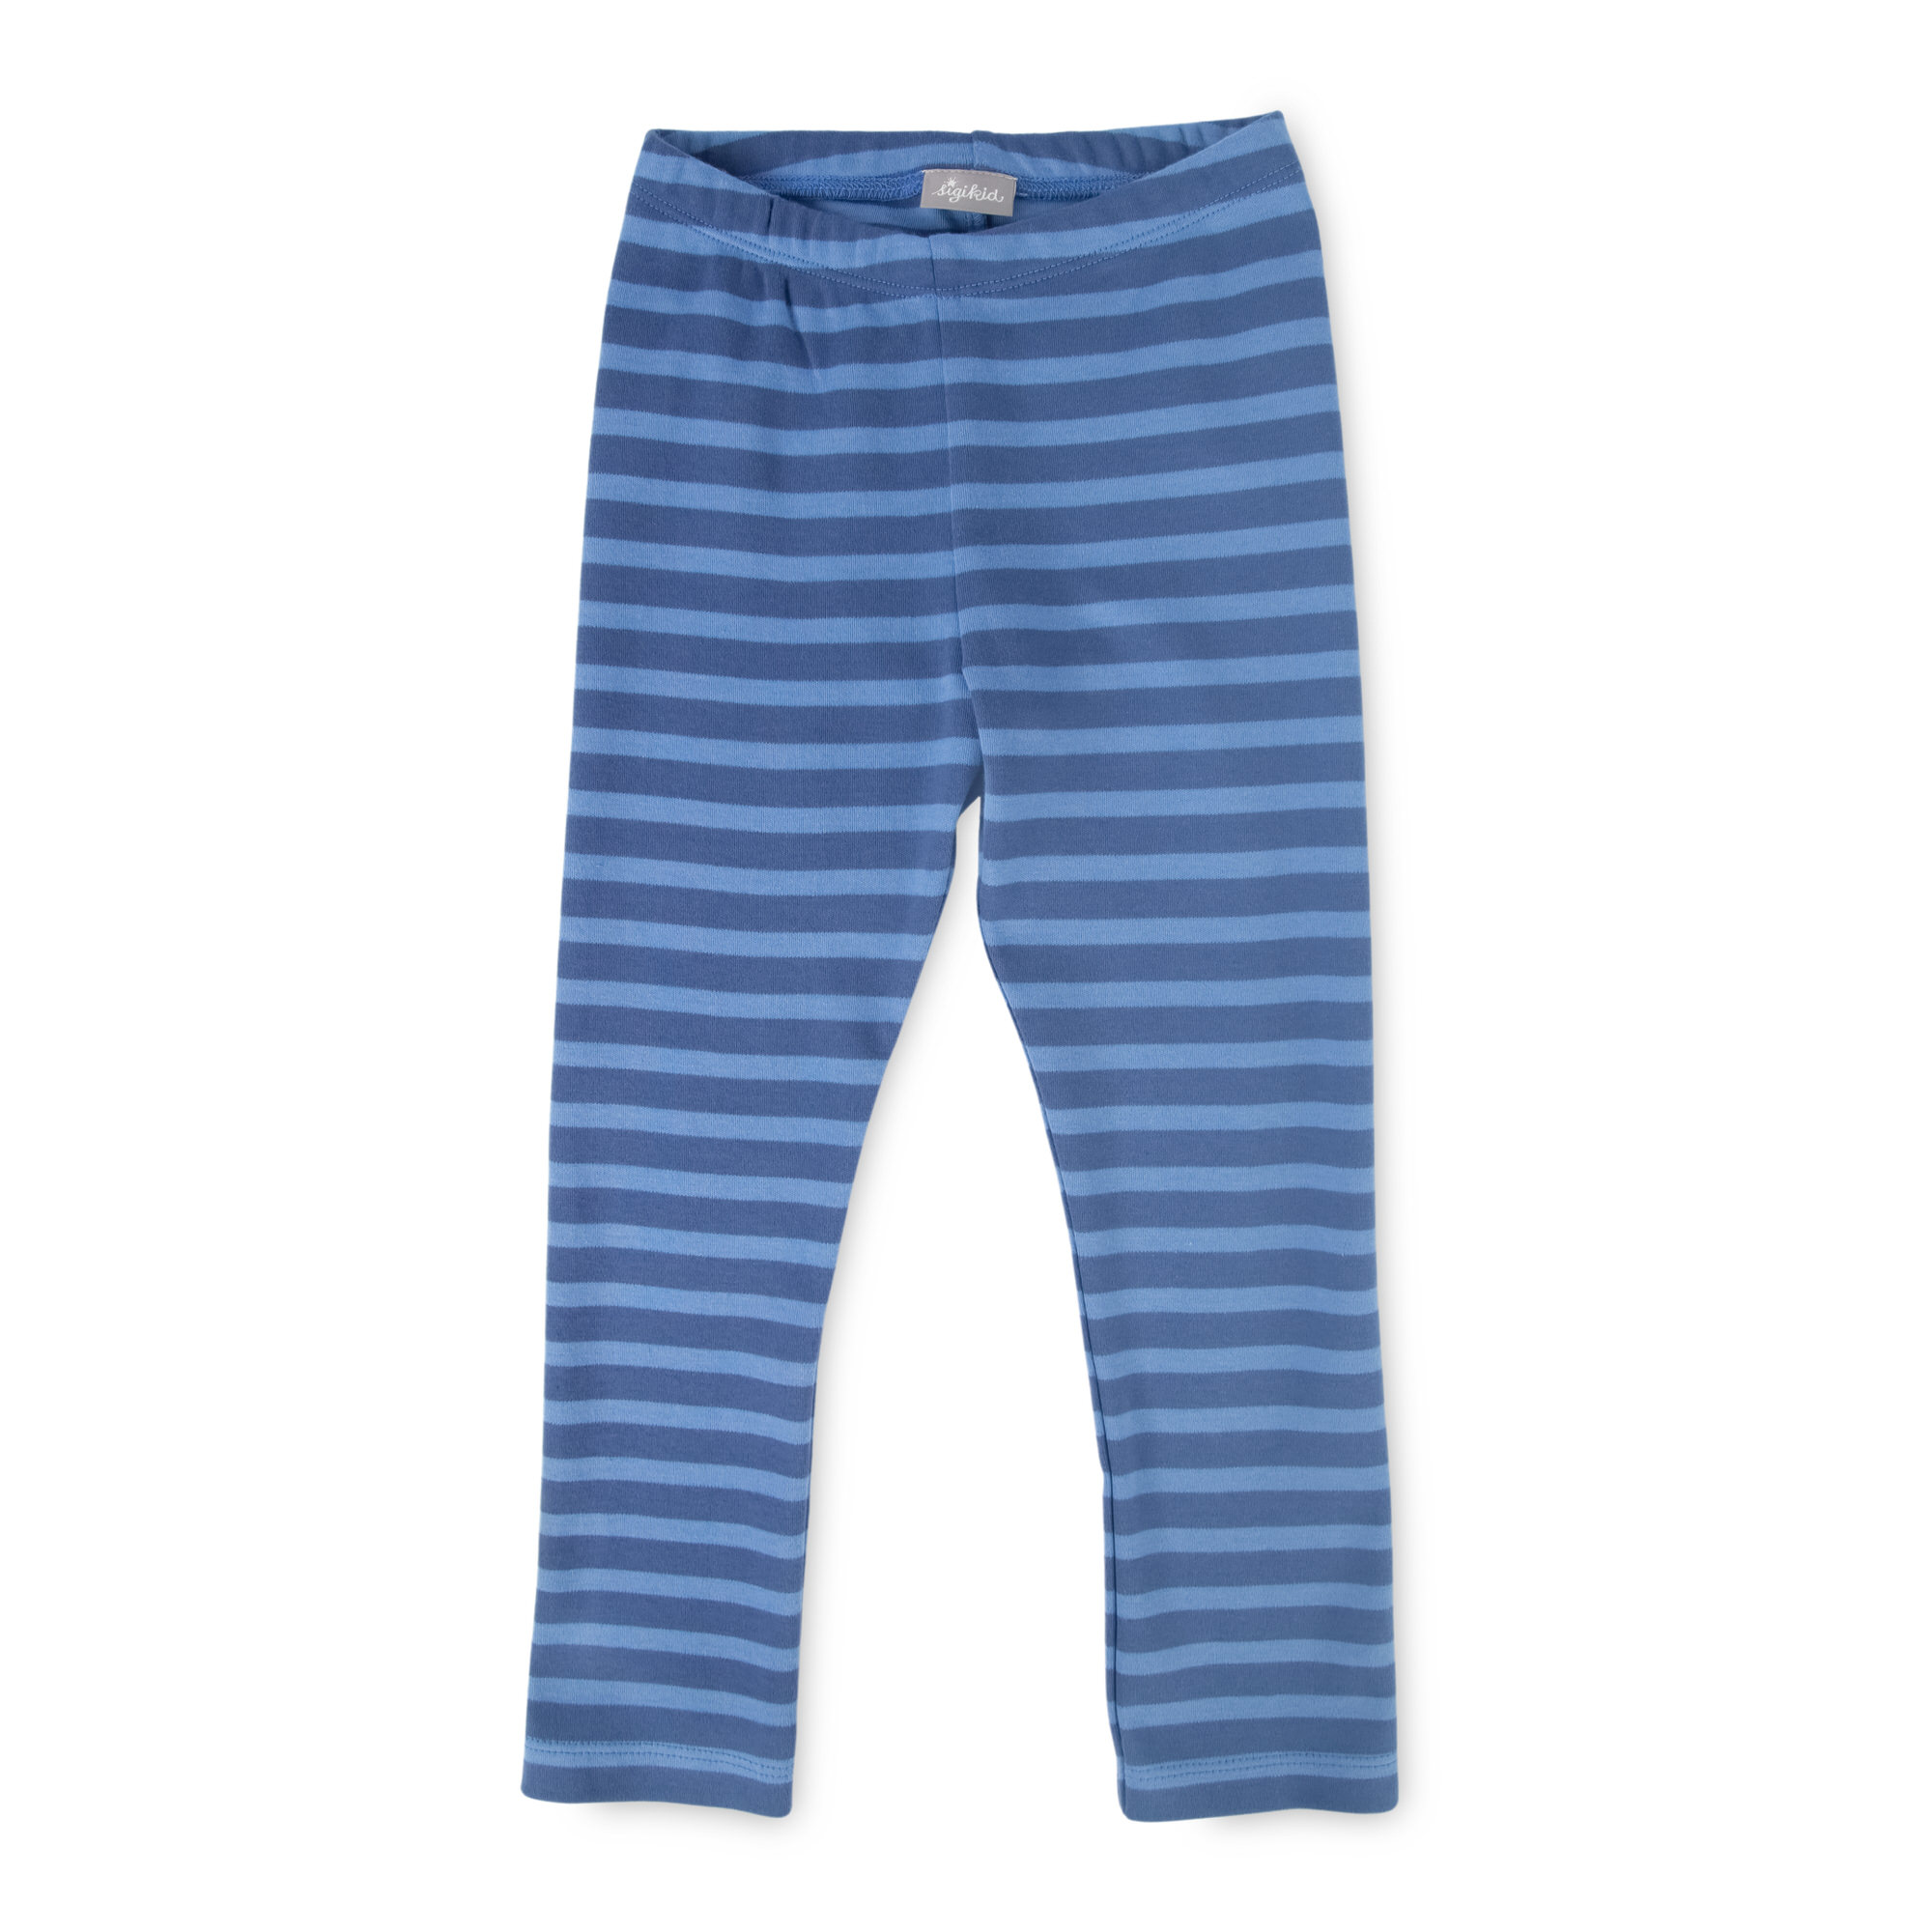 Two piece children's pyjamas bear, blue